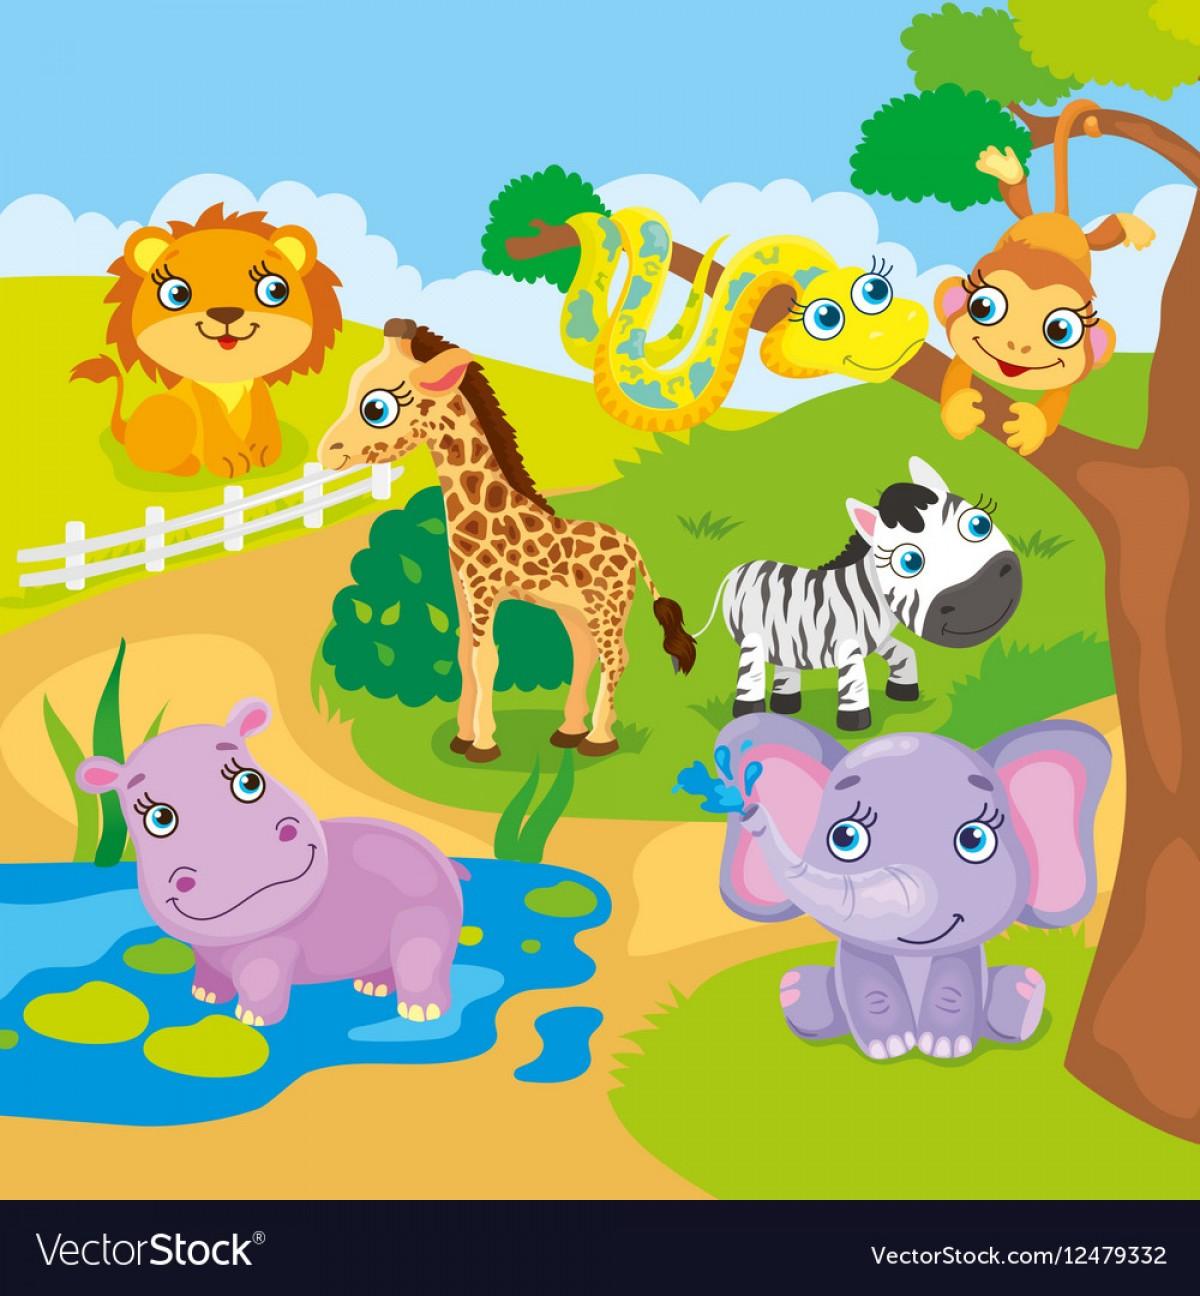 Animated zoo animals.